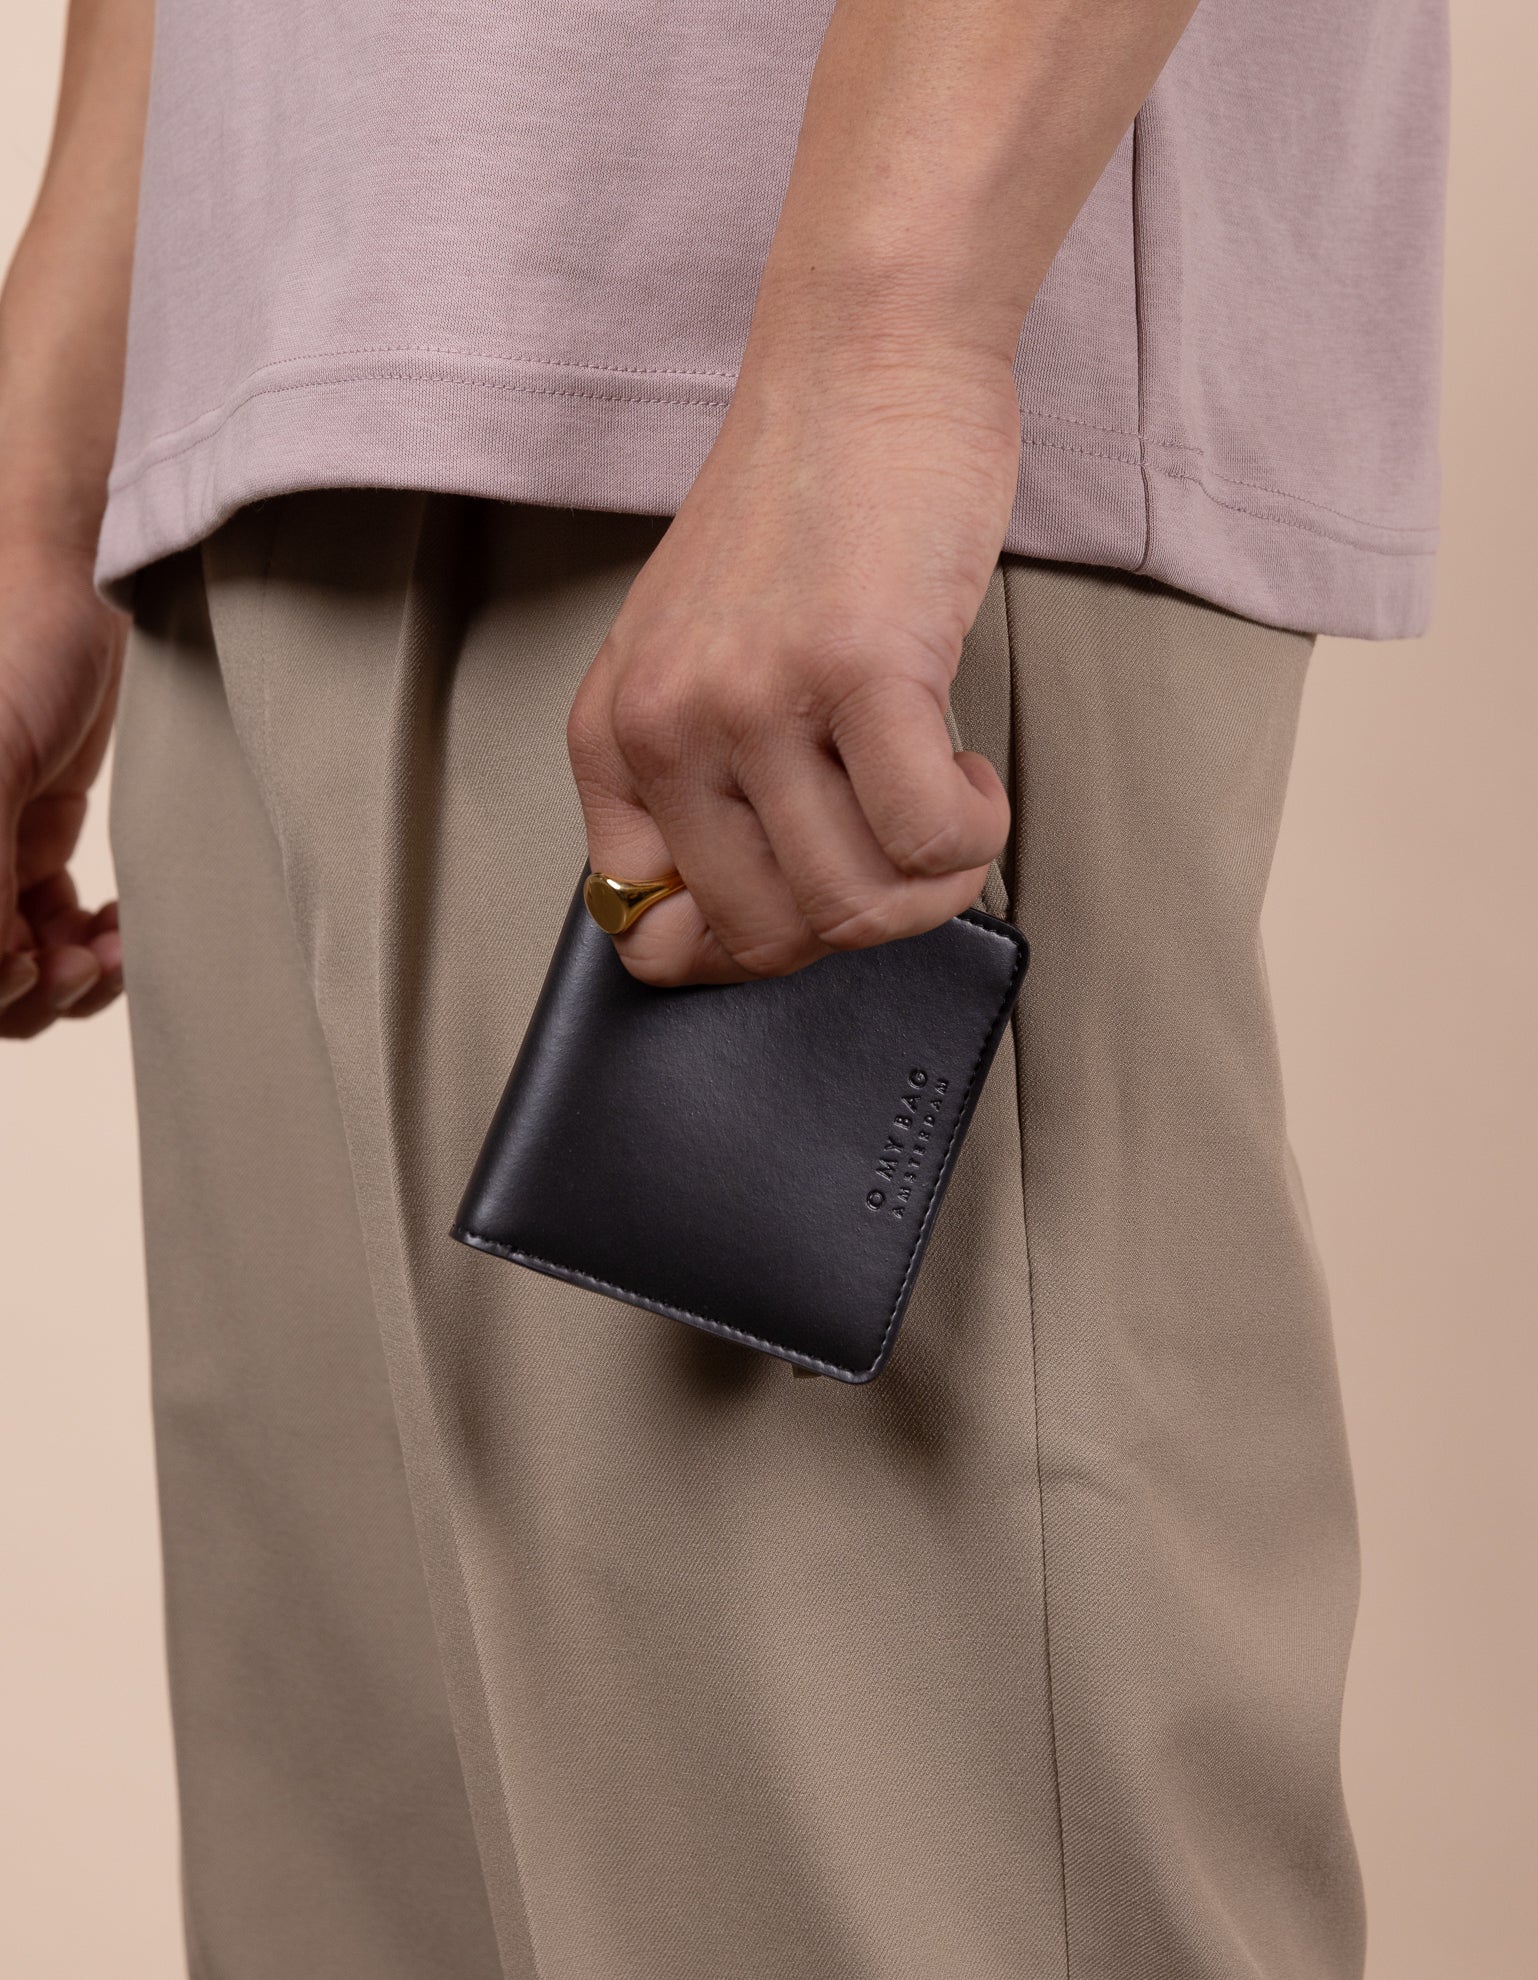 Alex fold over wallet in black apple leather - model holding it